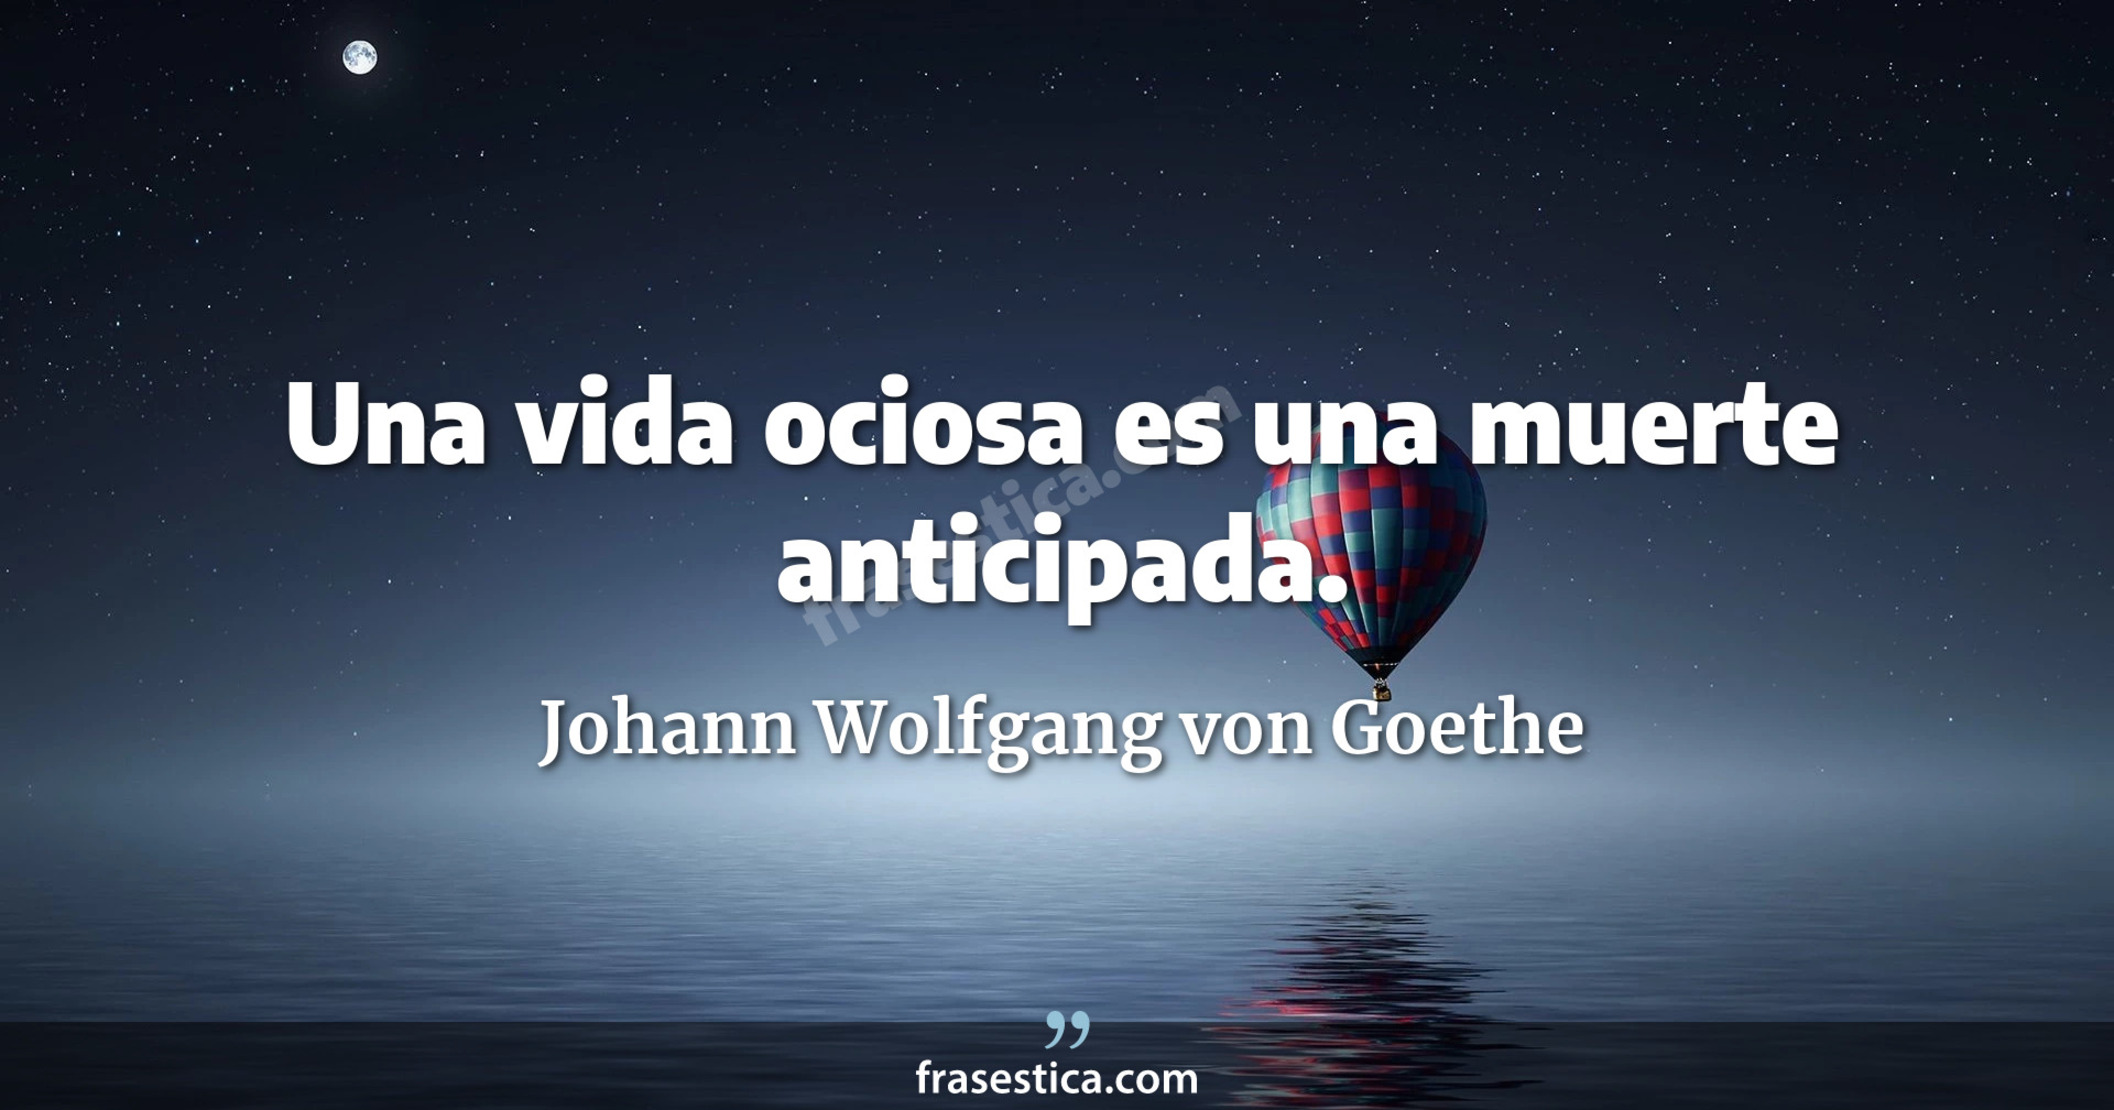 Una vida ociosa es una muerte anticipada. - Johann Wolfgang von Goethe